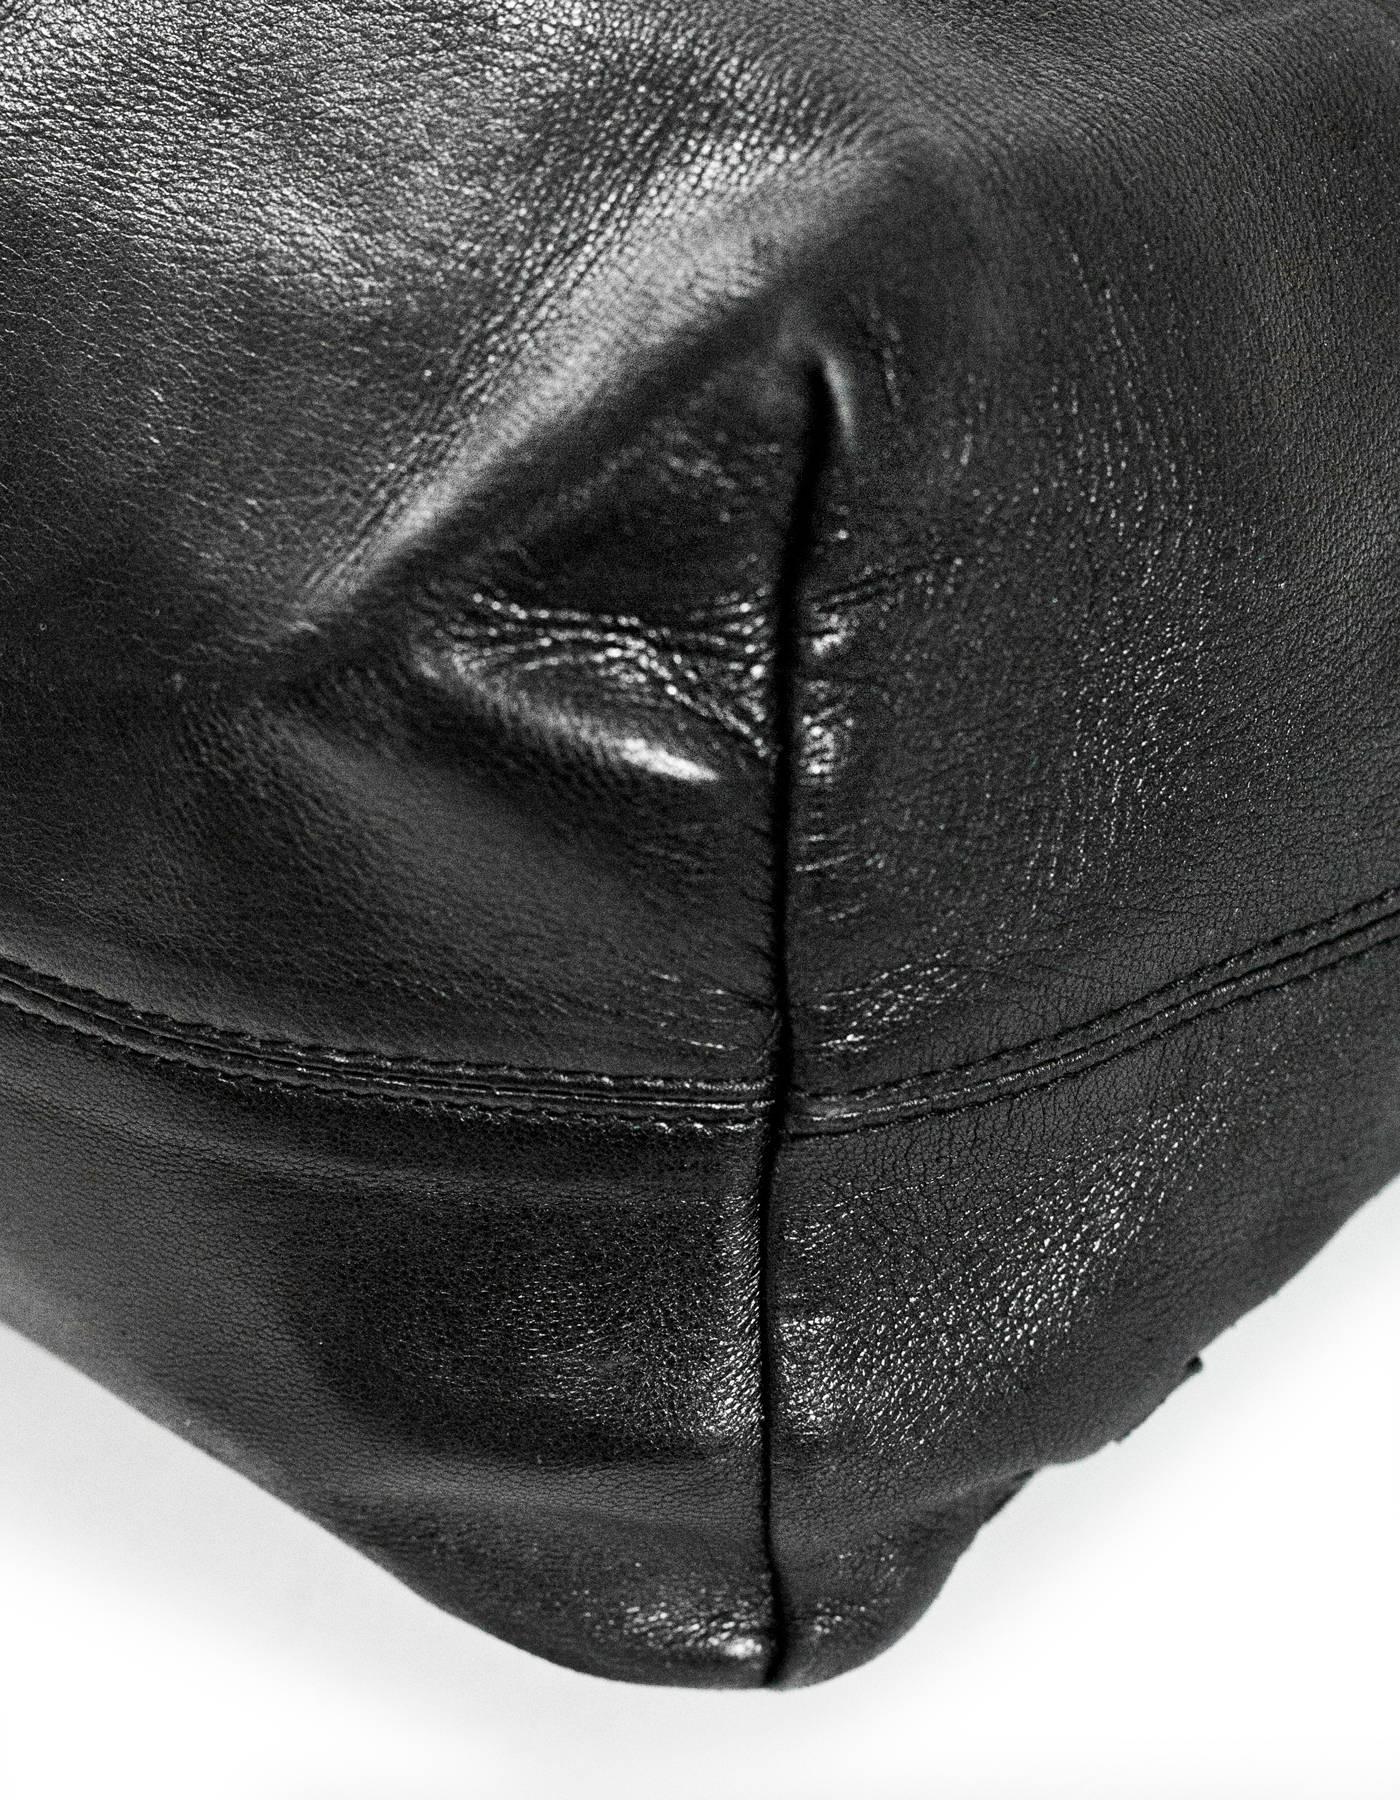 Bottega Veneta Black Leather & Intrecciato Woven Tote Bag In Good Condition In New York, NY